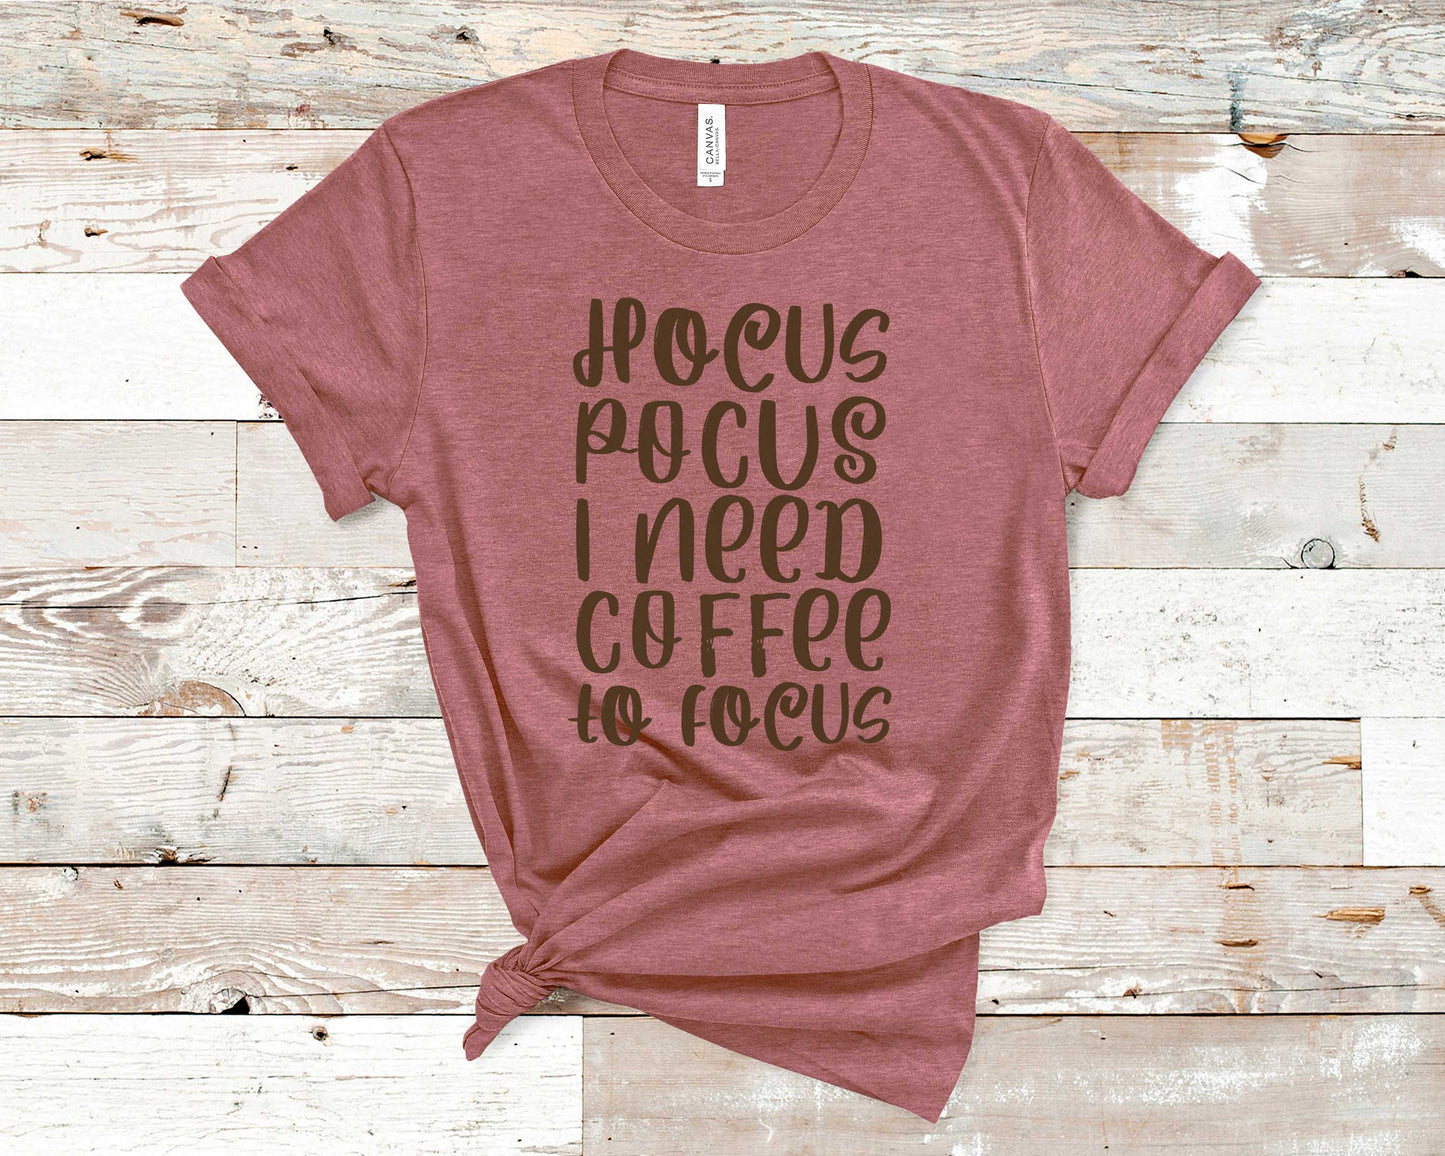 Hocus Pocus I Need Coffee To Focus - Coffee Lovers